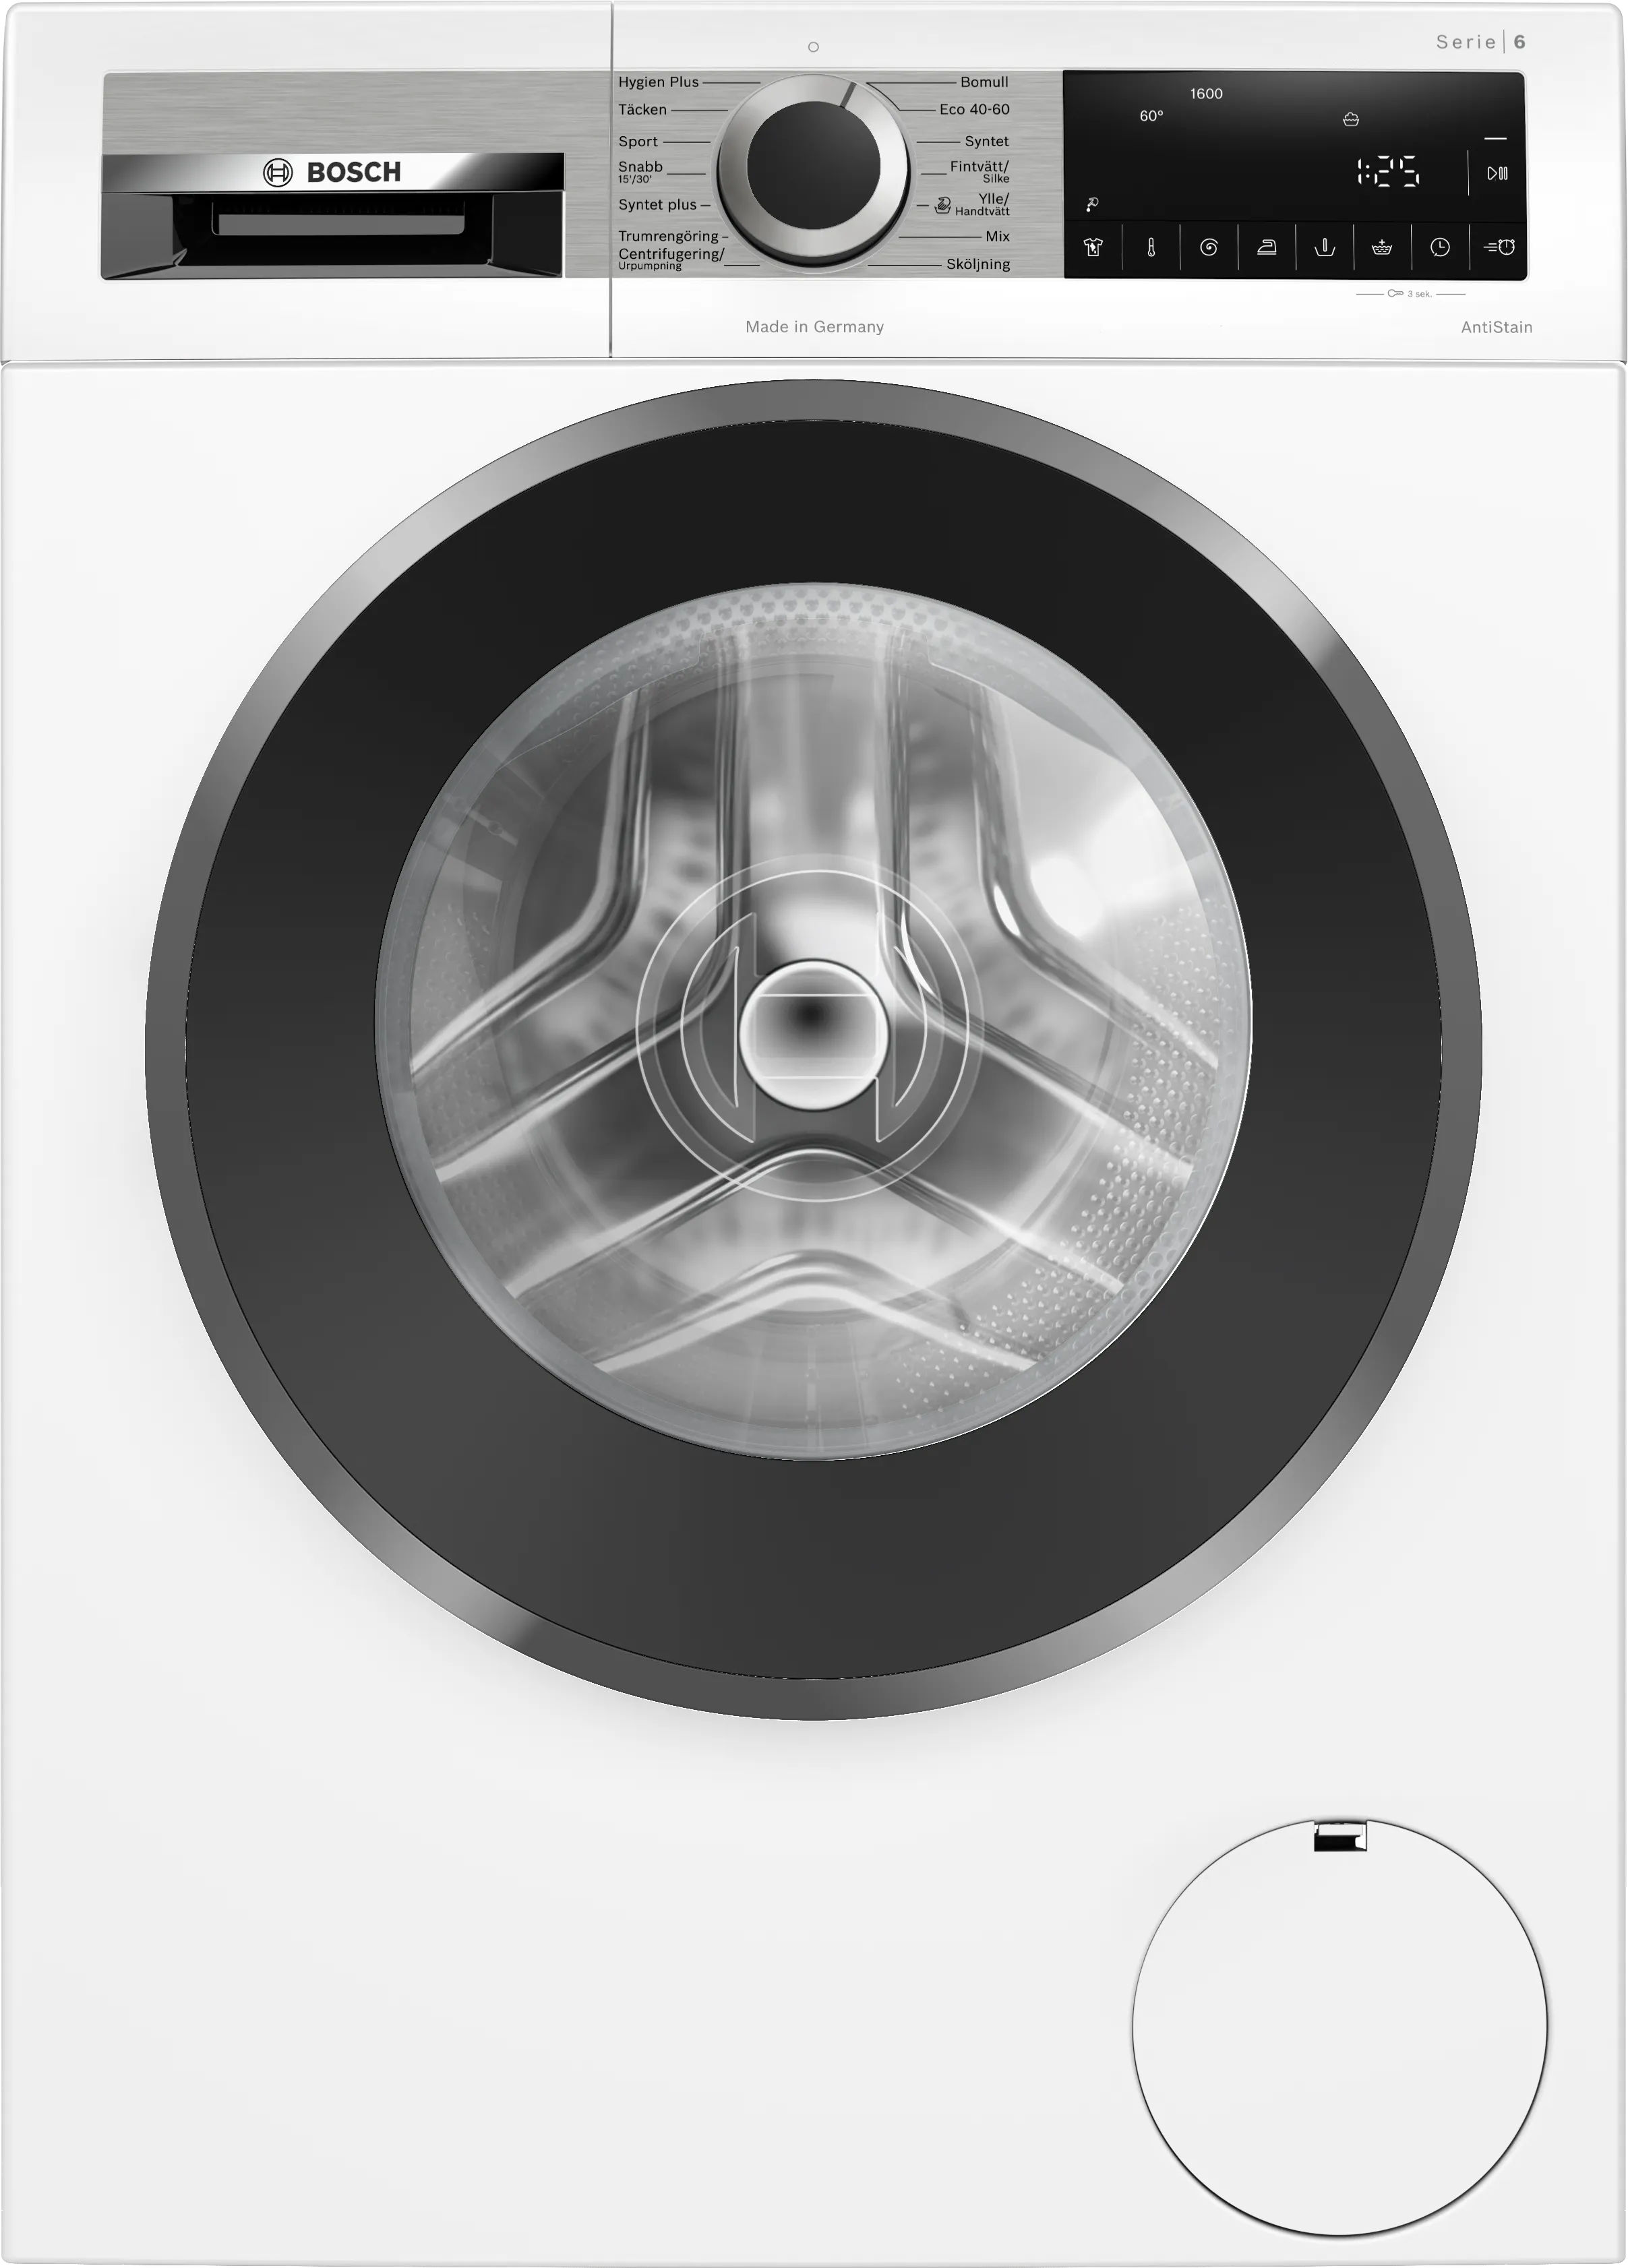 Series 6 washing machine, frontloader fullsize 10 kg 1600 rpm 